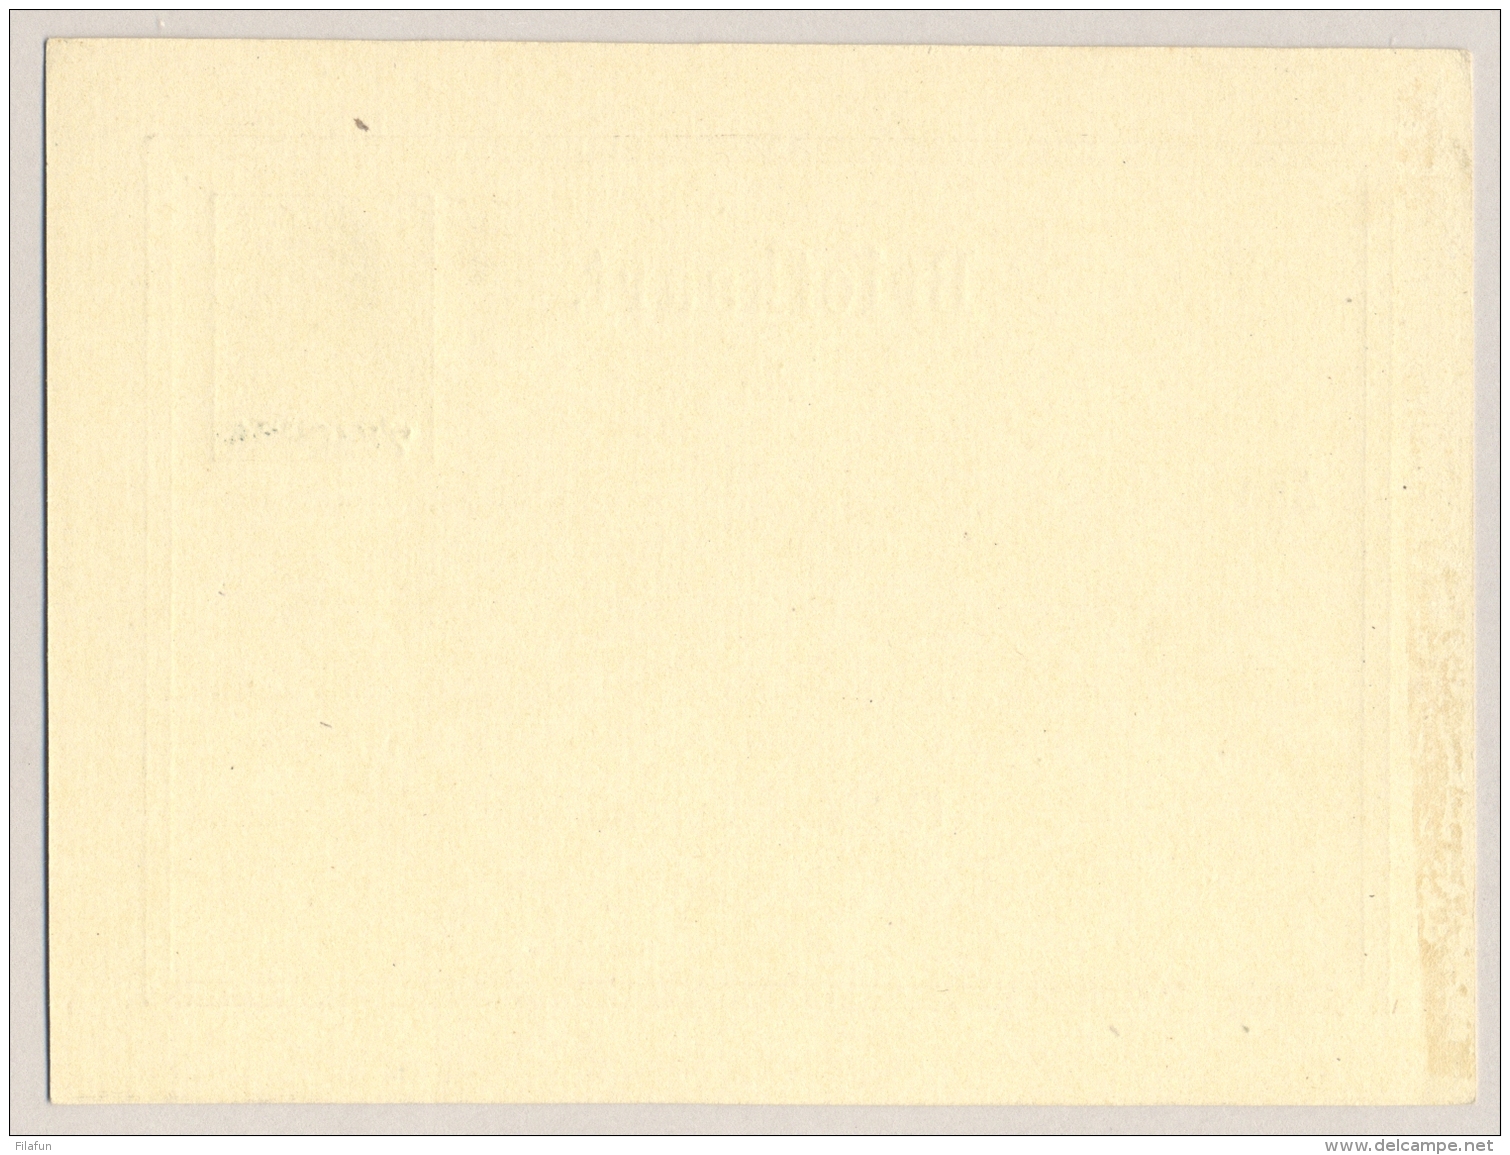 Suriname - 1876/9 - 4 Ongebruikte Briefkaarten - not used